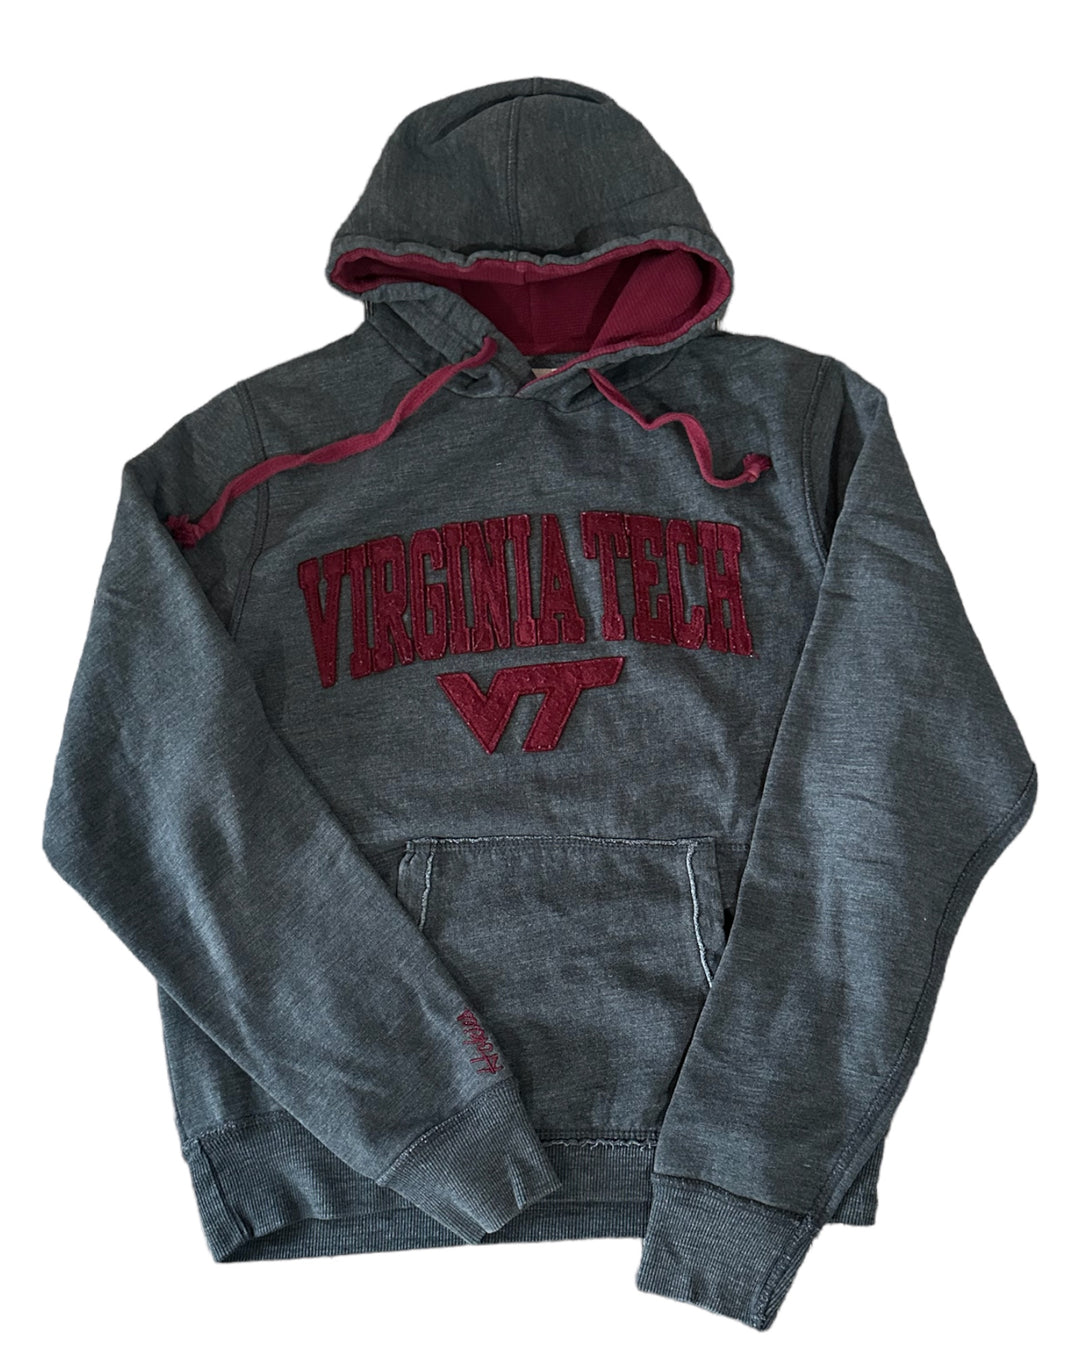 Virginia Tech Vintage Sweatshirt